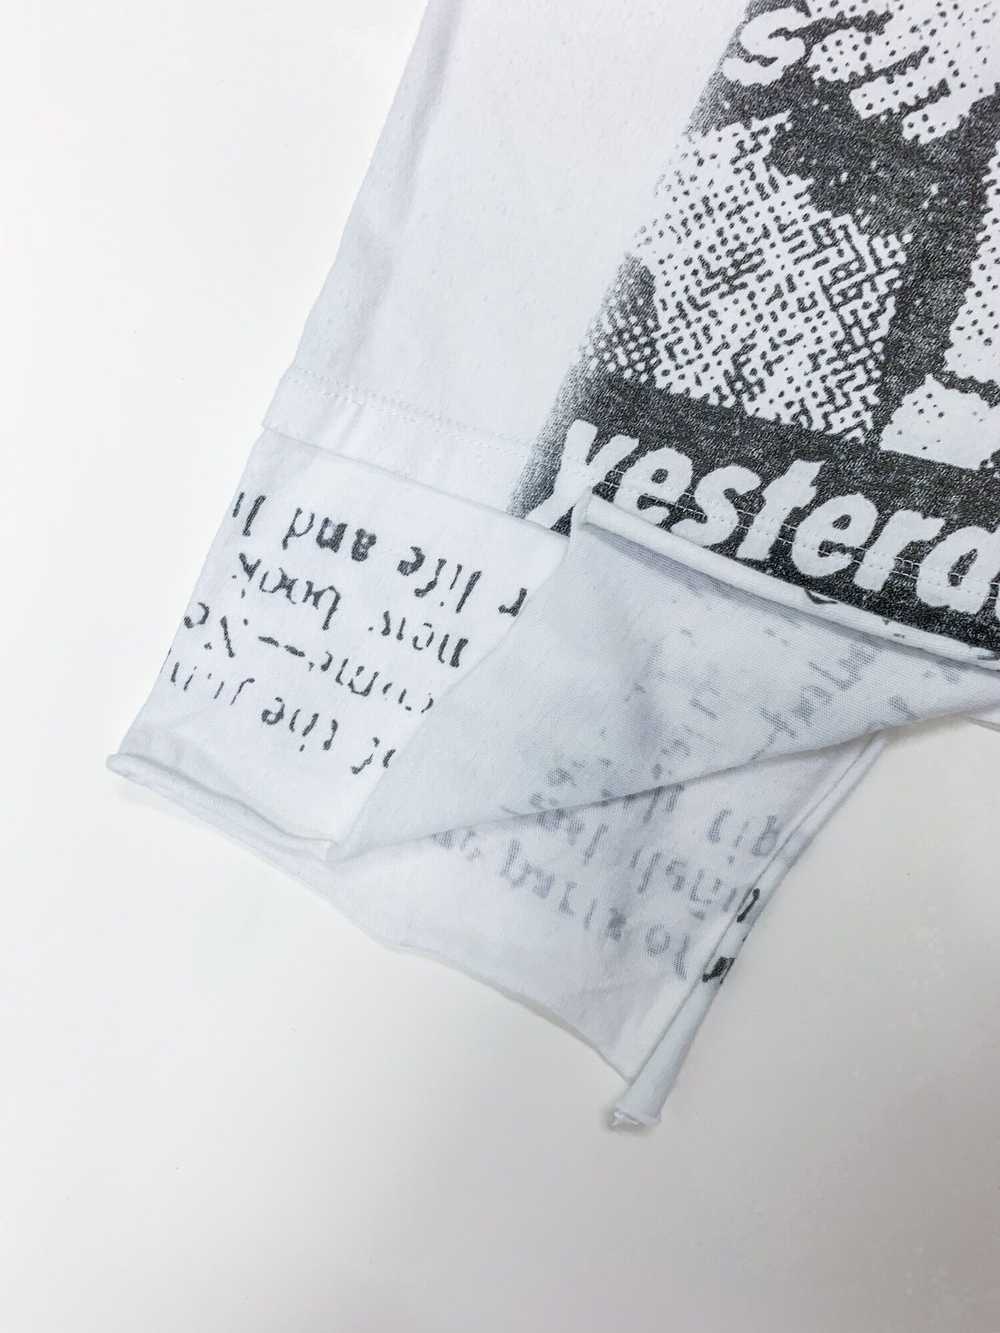 Raf by Raf Simons Cutoff Print T-Shirt "Yesterday" - image 3